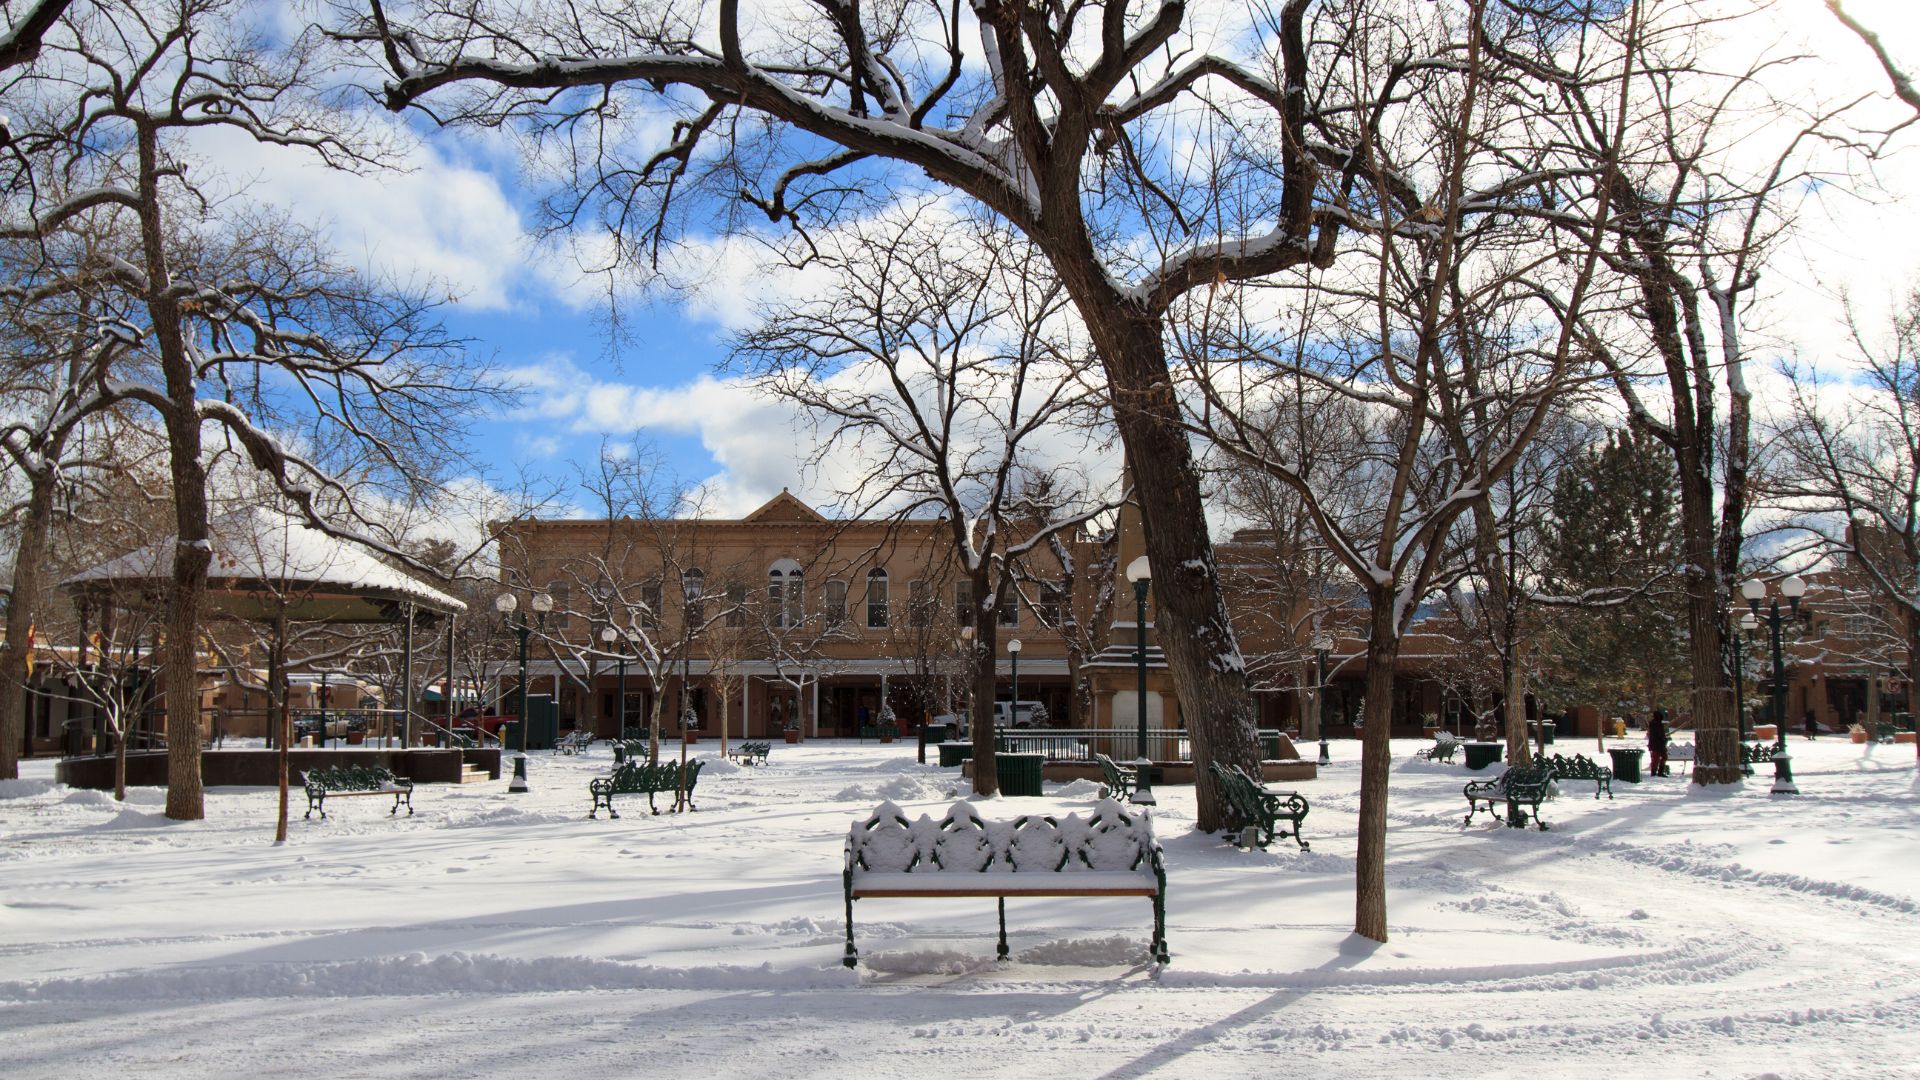 Santa Fe's downtown plaza covered in fresh white snow.